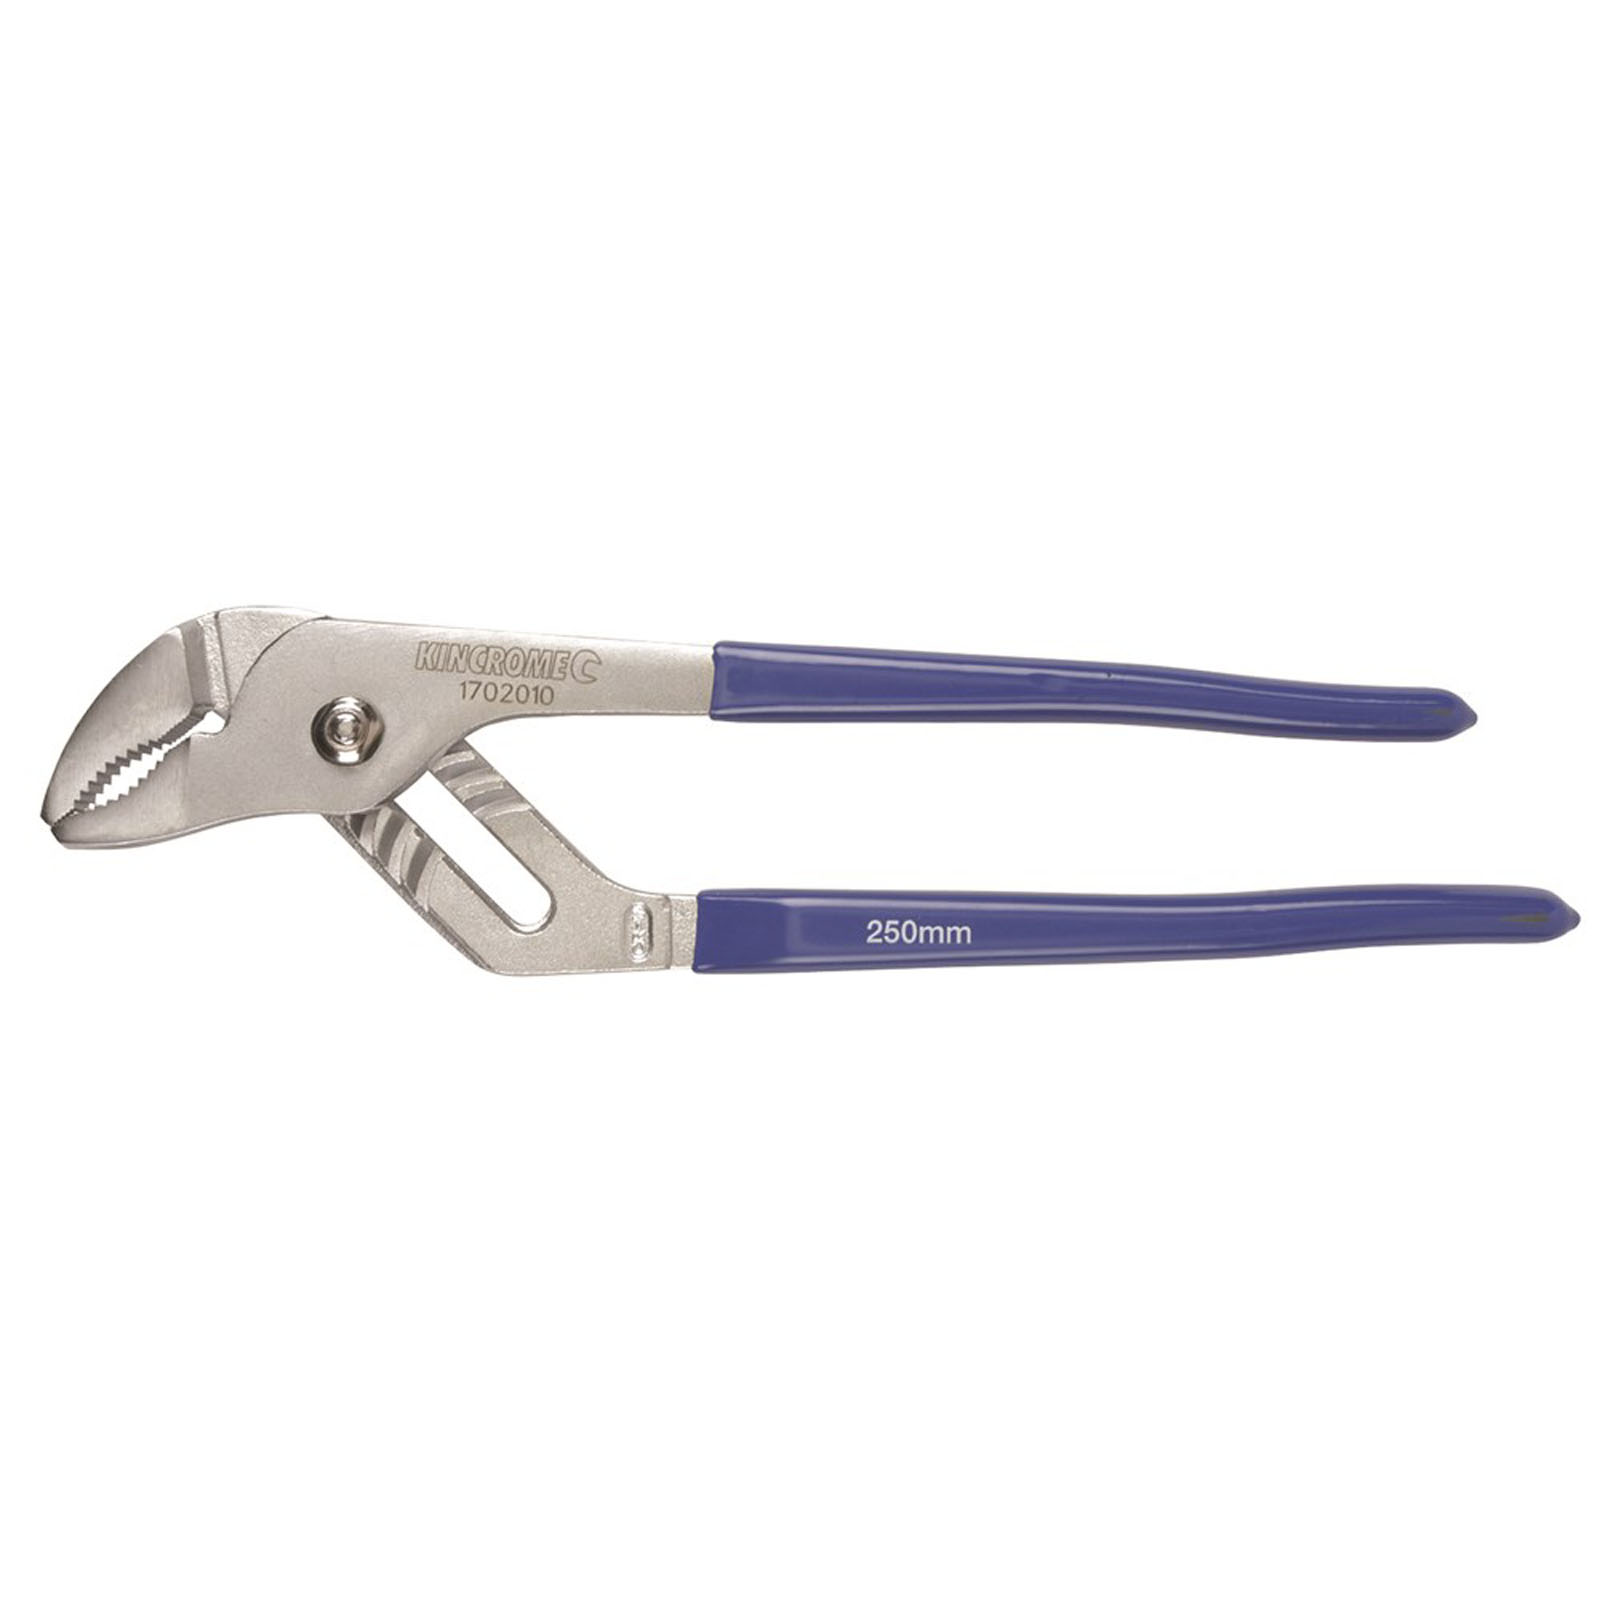 Hand Tools > Pliers > Multigrip Pliers